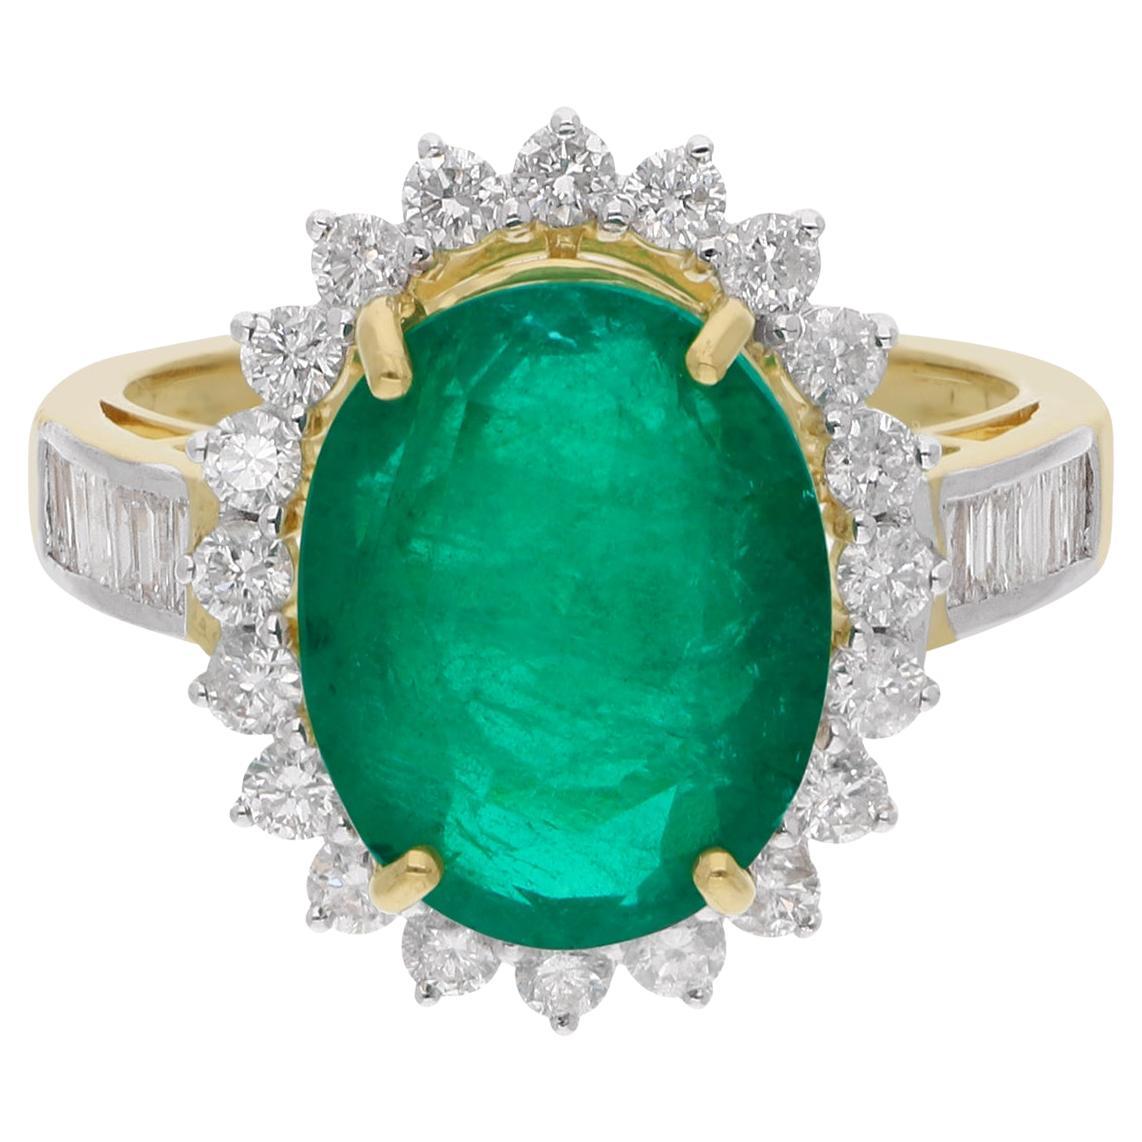 Real Oval Zambian Emerald Gemstone Cocktail Ring Diamond 18k Yellow Gold Jewelry